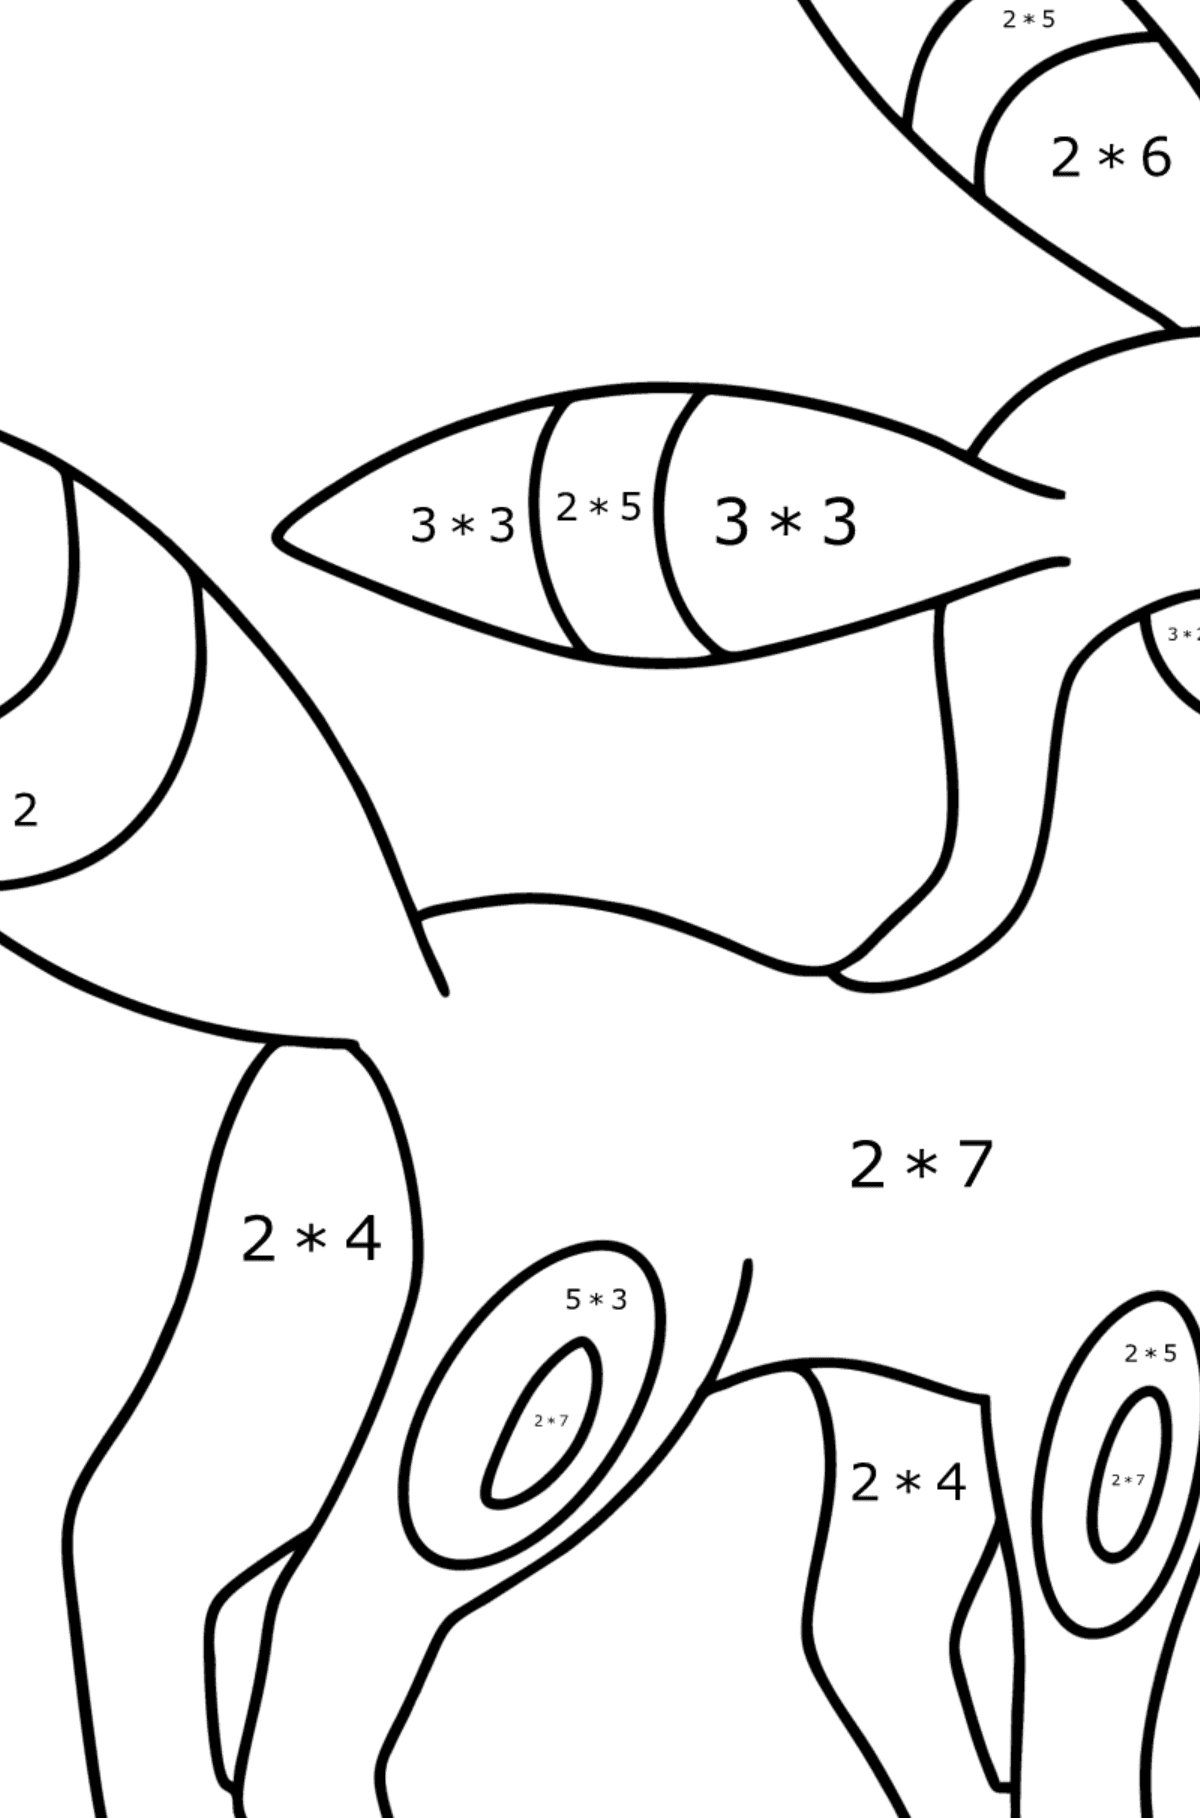 Ausmalbild Pokemon Go Umbreon - Mathe Ausmalbilder - Multiplikation für Kinder